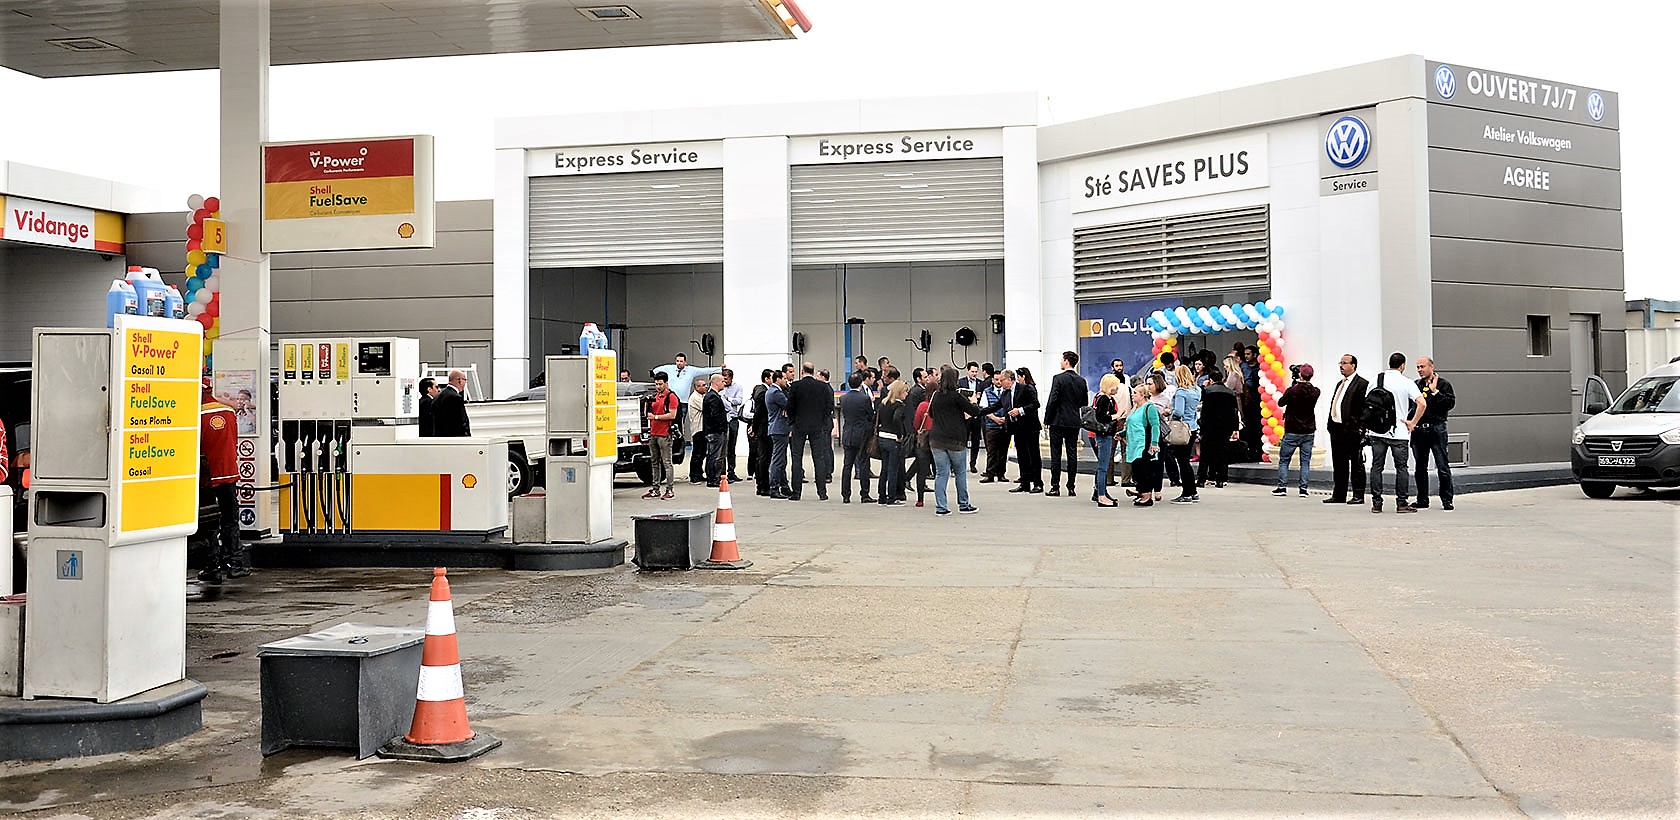 Premier atelier Volkswagen Express Service en partenariat avec Shell